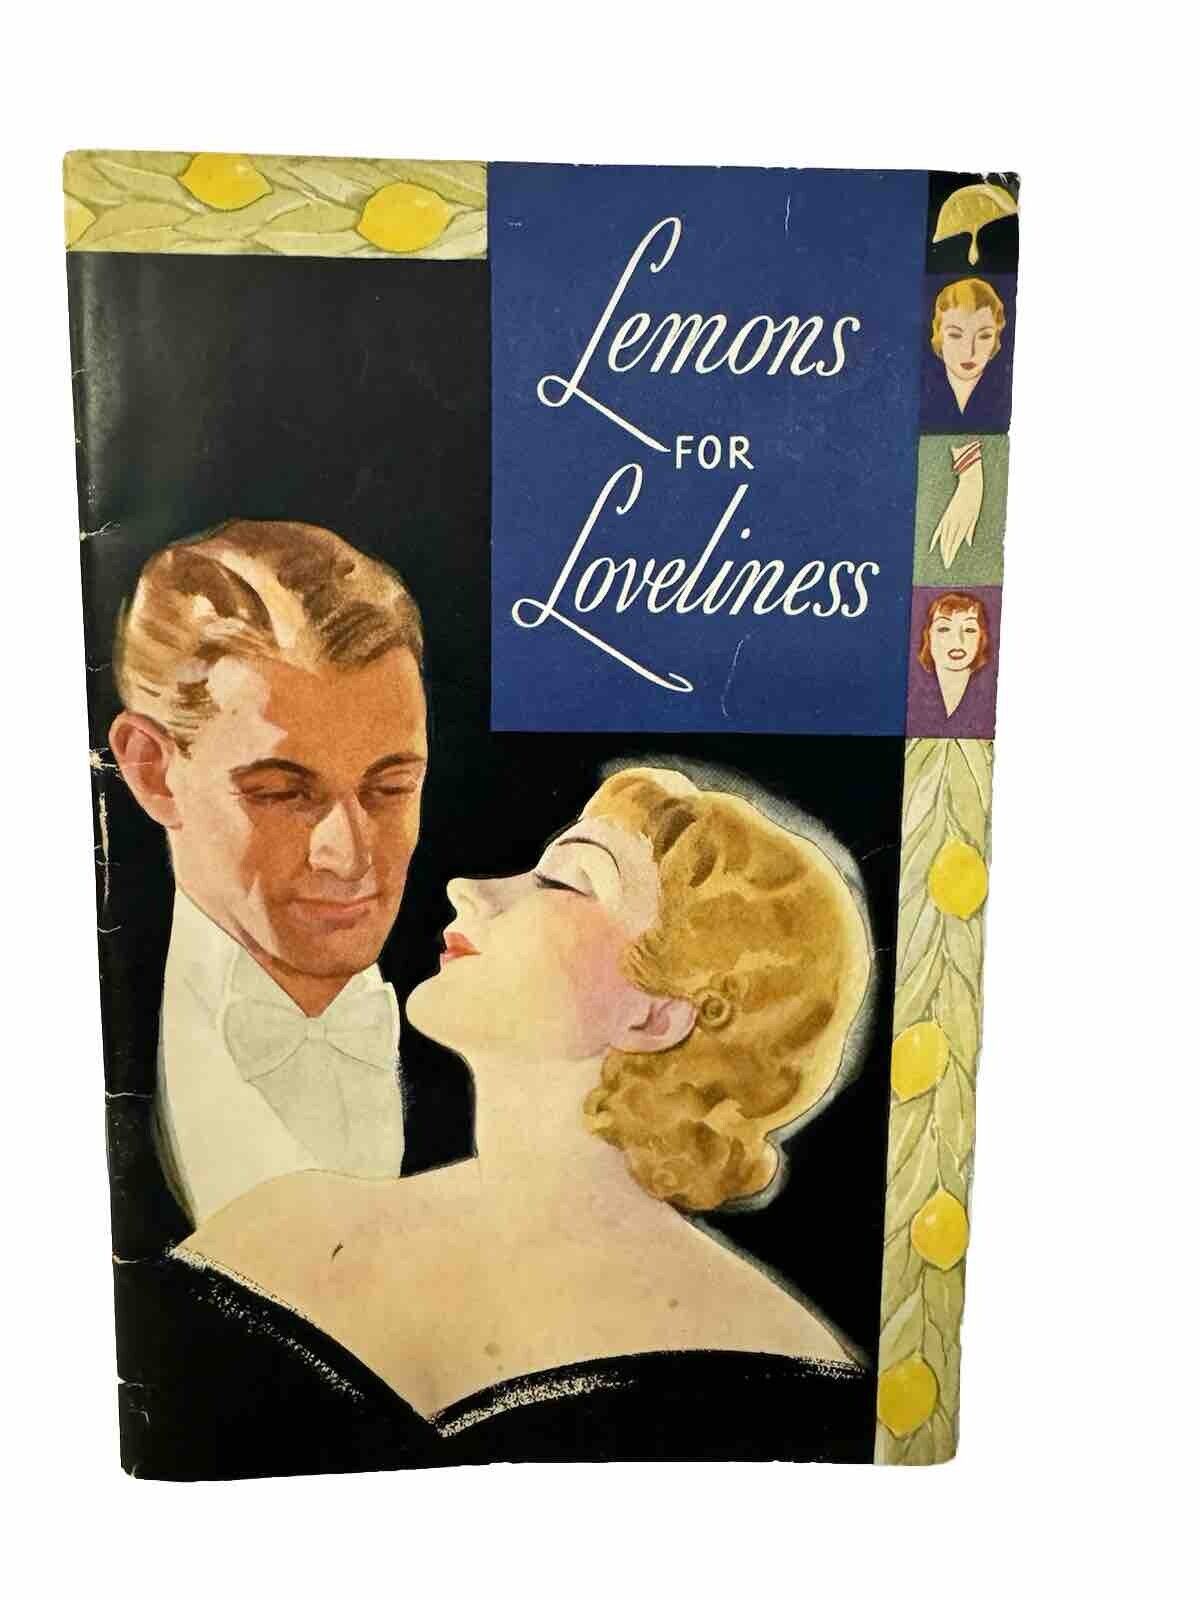 Vintage 1936 Lemons For Loveliness Woman’s Health Booklet